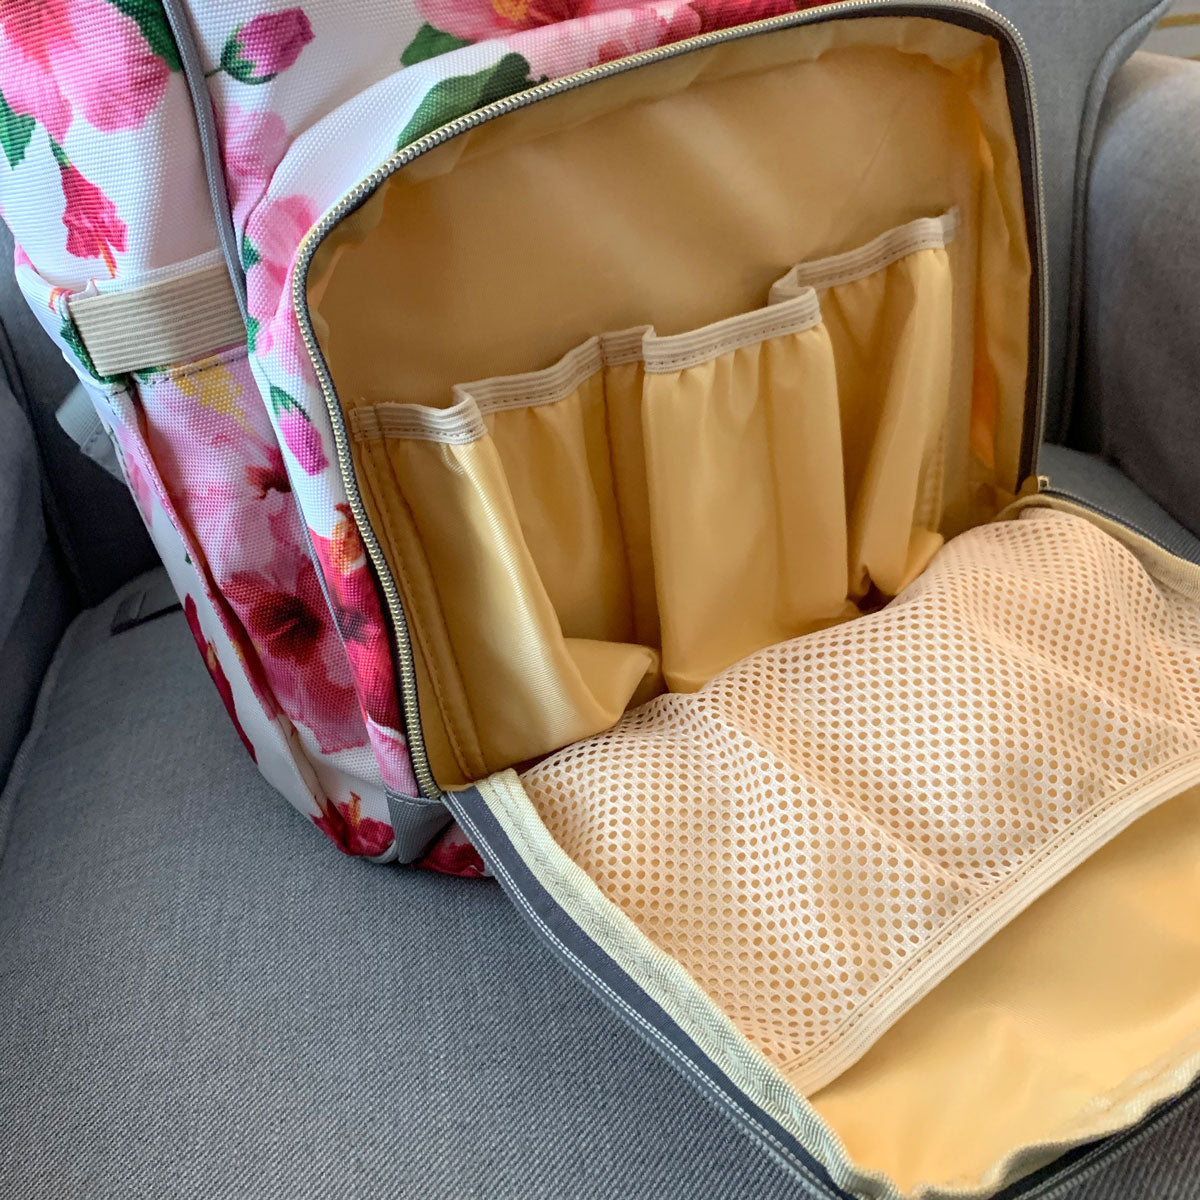 Guam Pink Floral Baby Diaper Backpack Bag